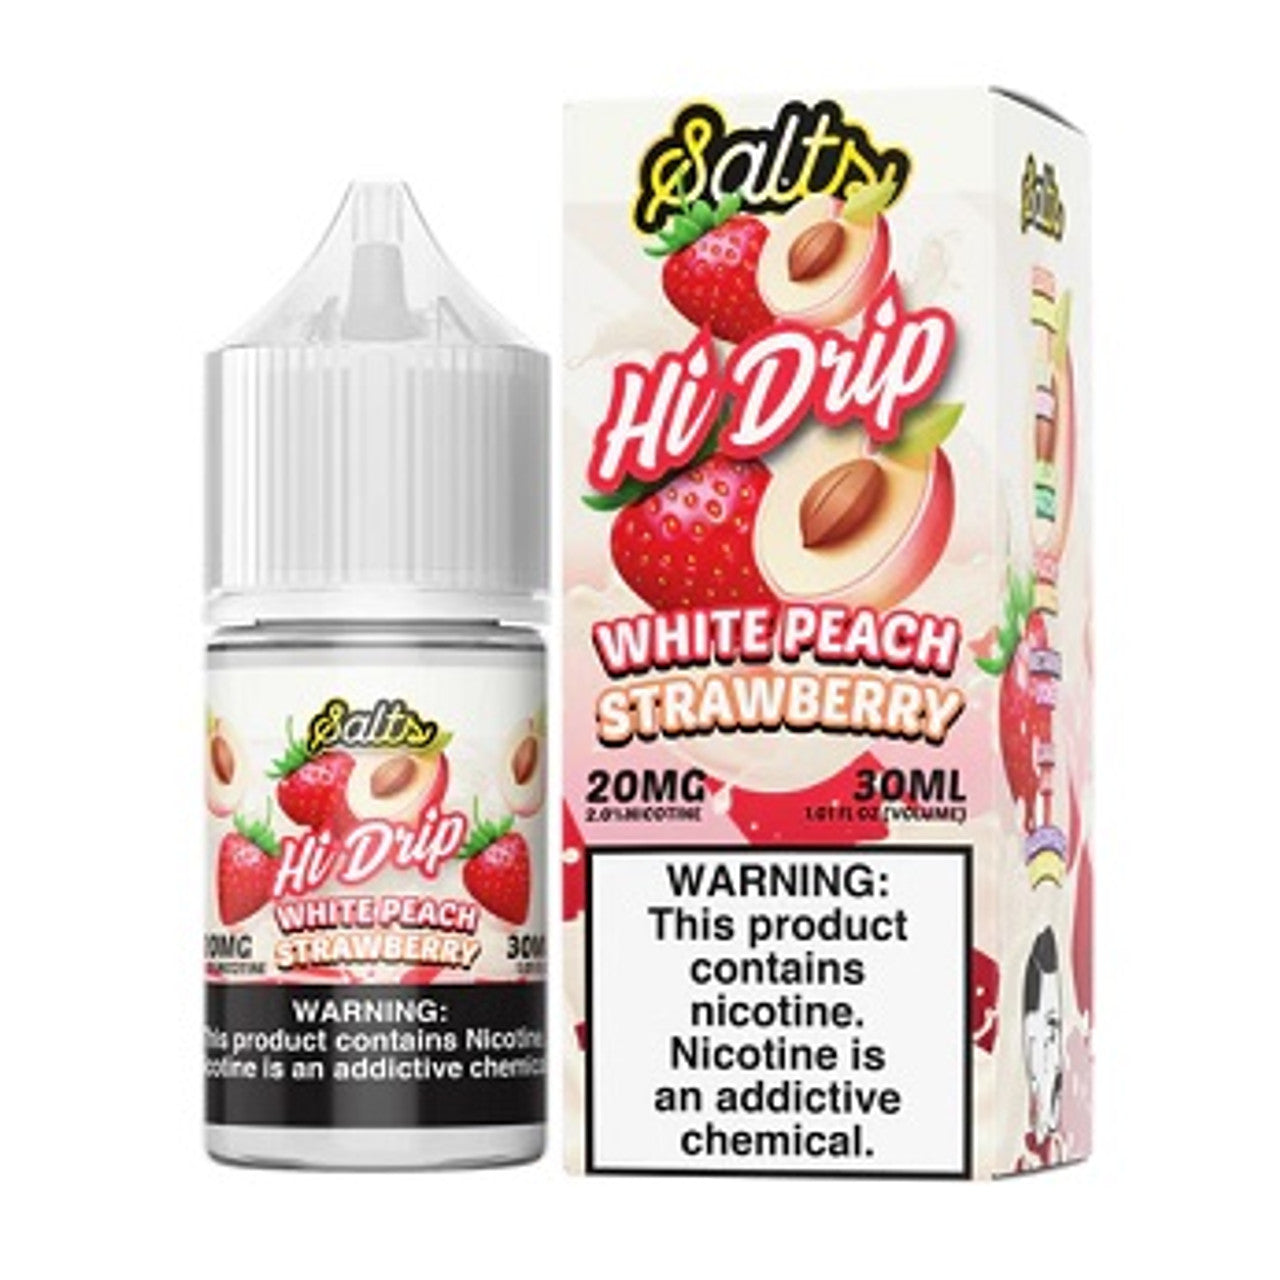 Hi Drip Salt - White Peach Strawberry